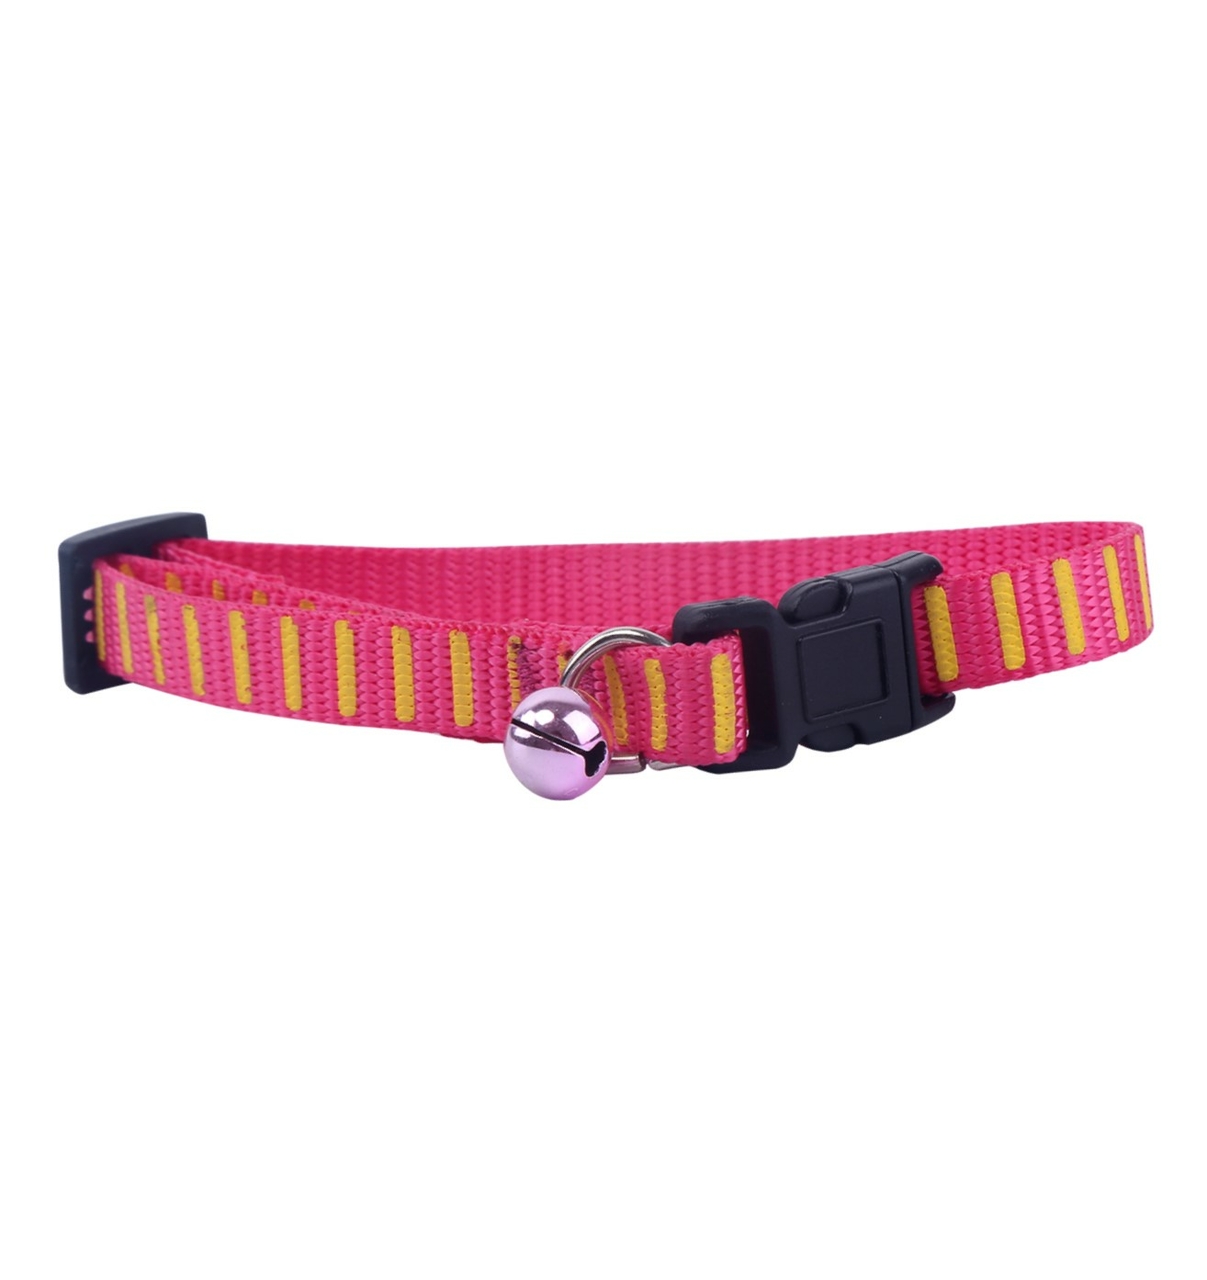 Nobleza kattenhalsband - kattenhalsband veiligheidssluiting - kattenhalsband met belletje - kittenhalsband - 30 cm - Roze - Geel